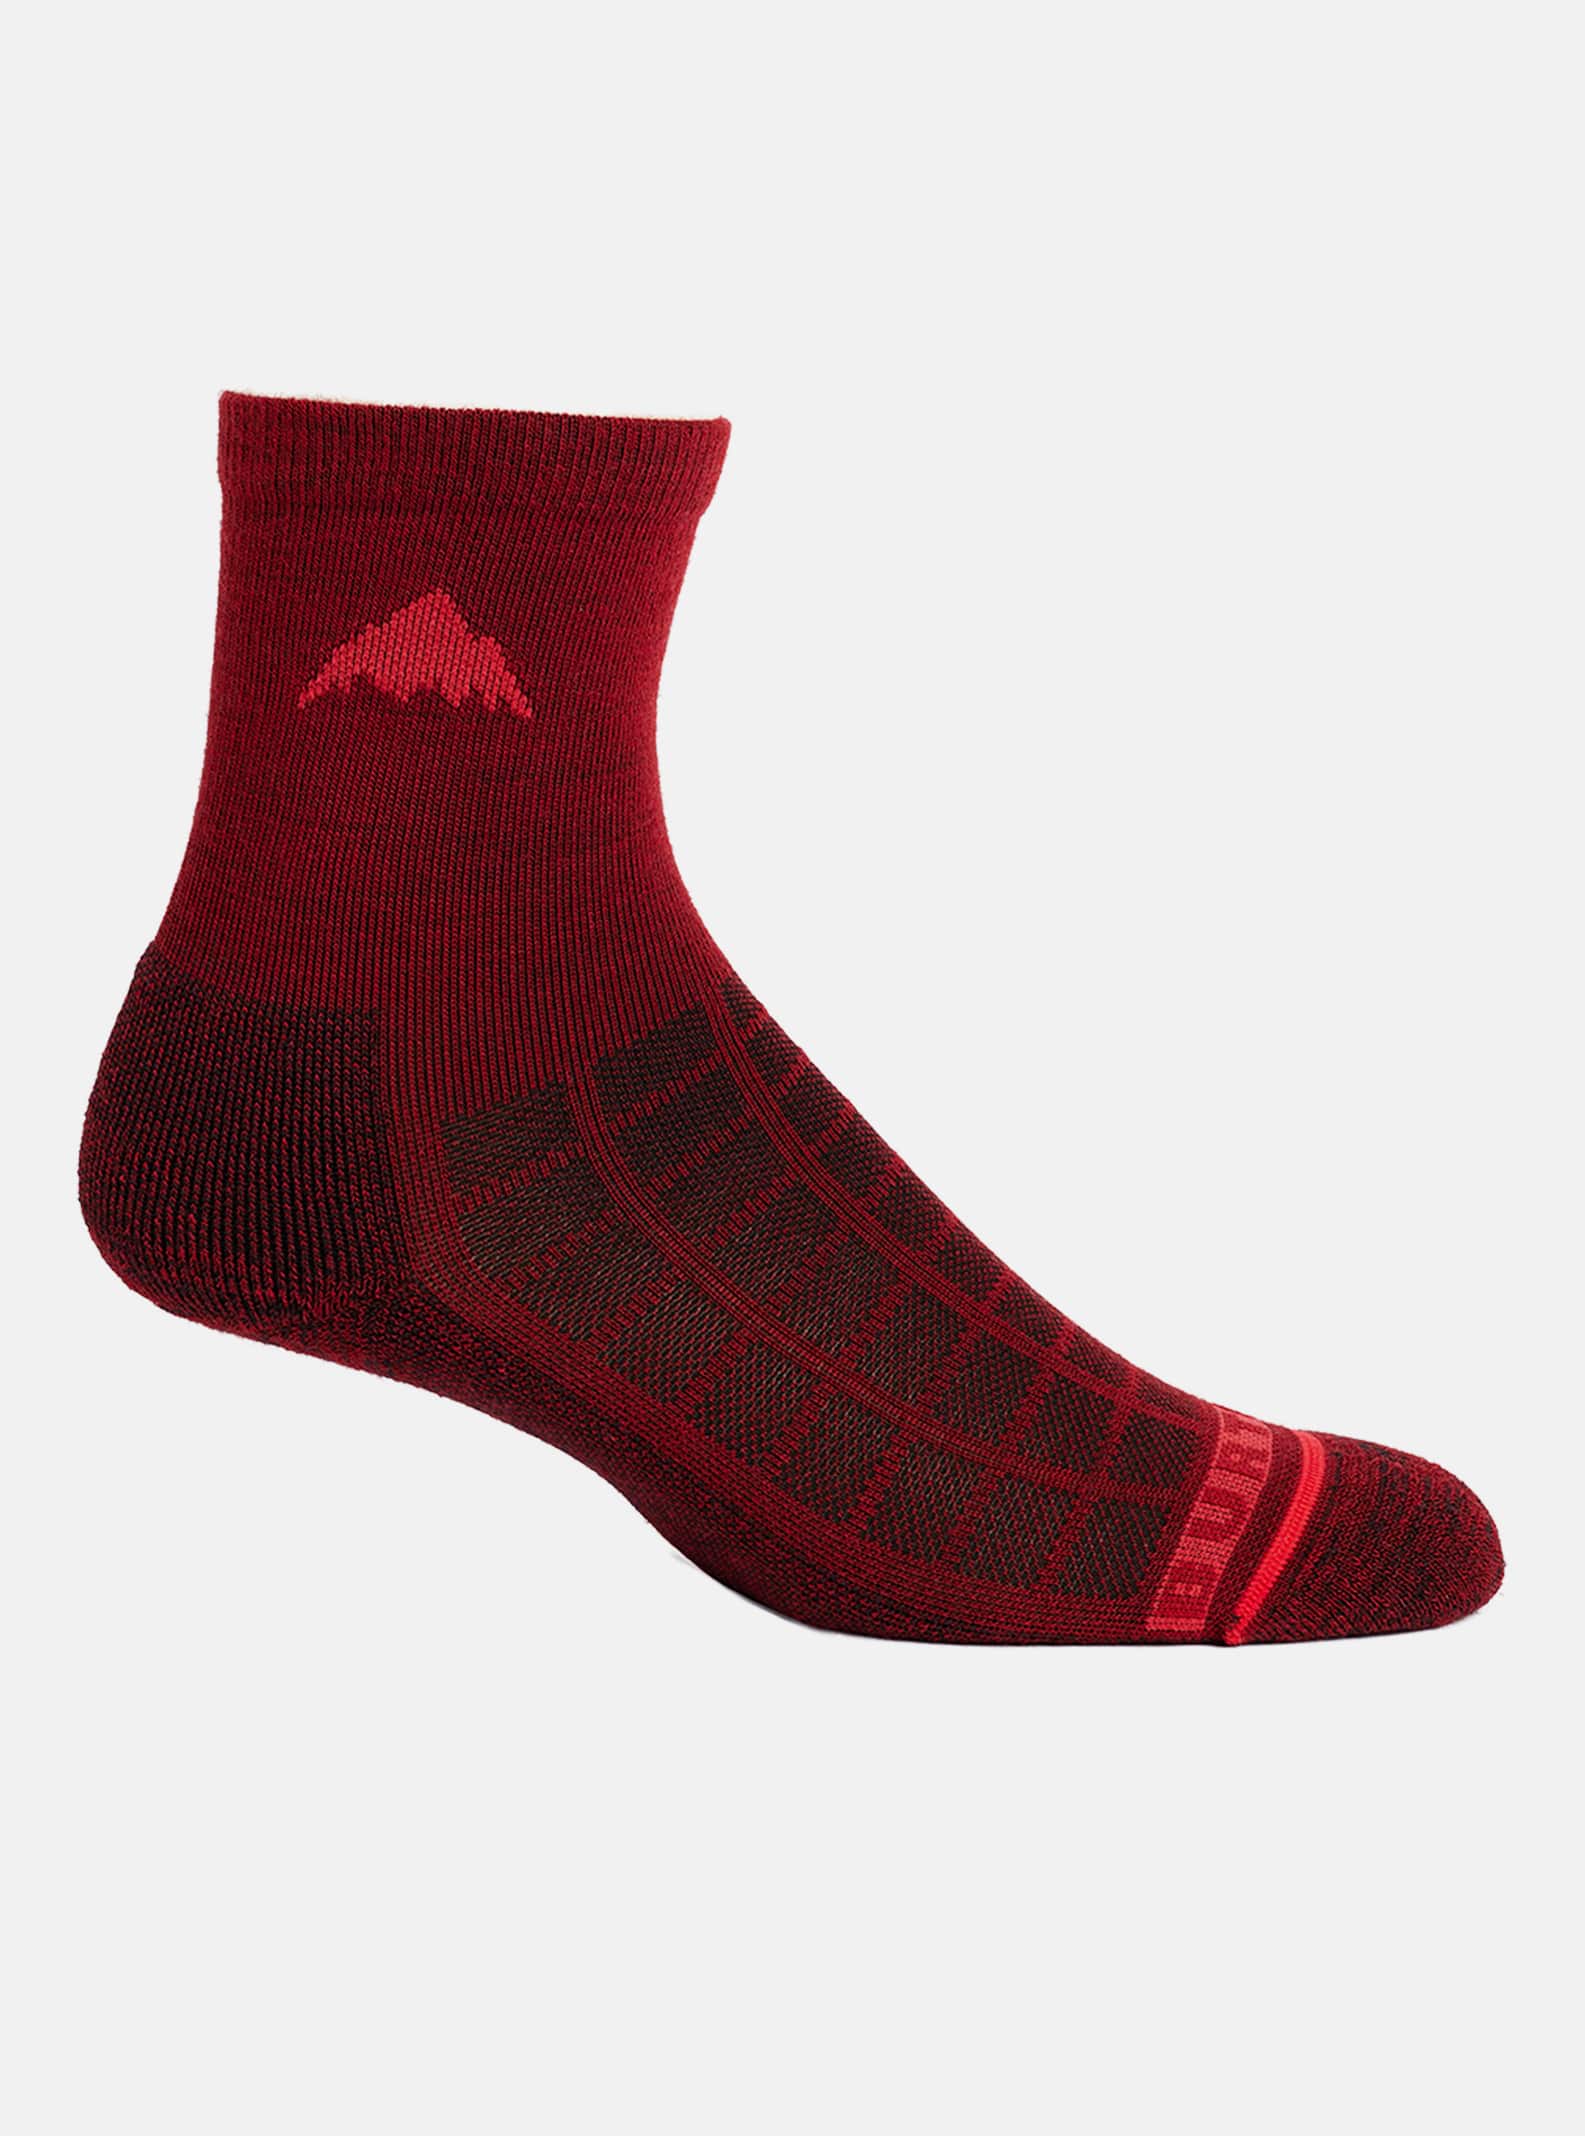 Women's Socks | Burton Snowboards US